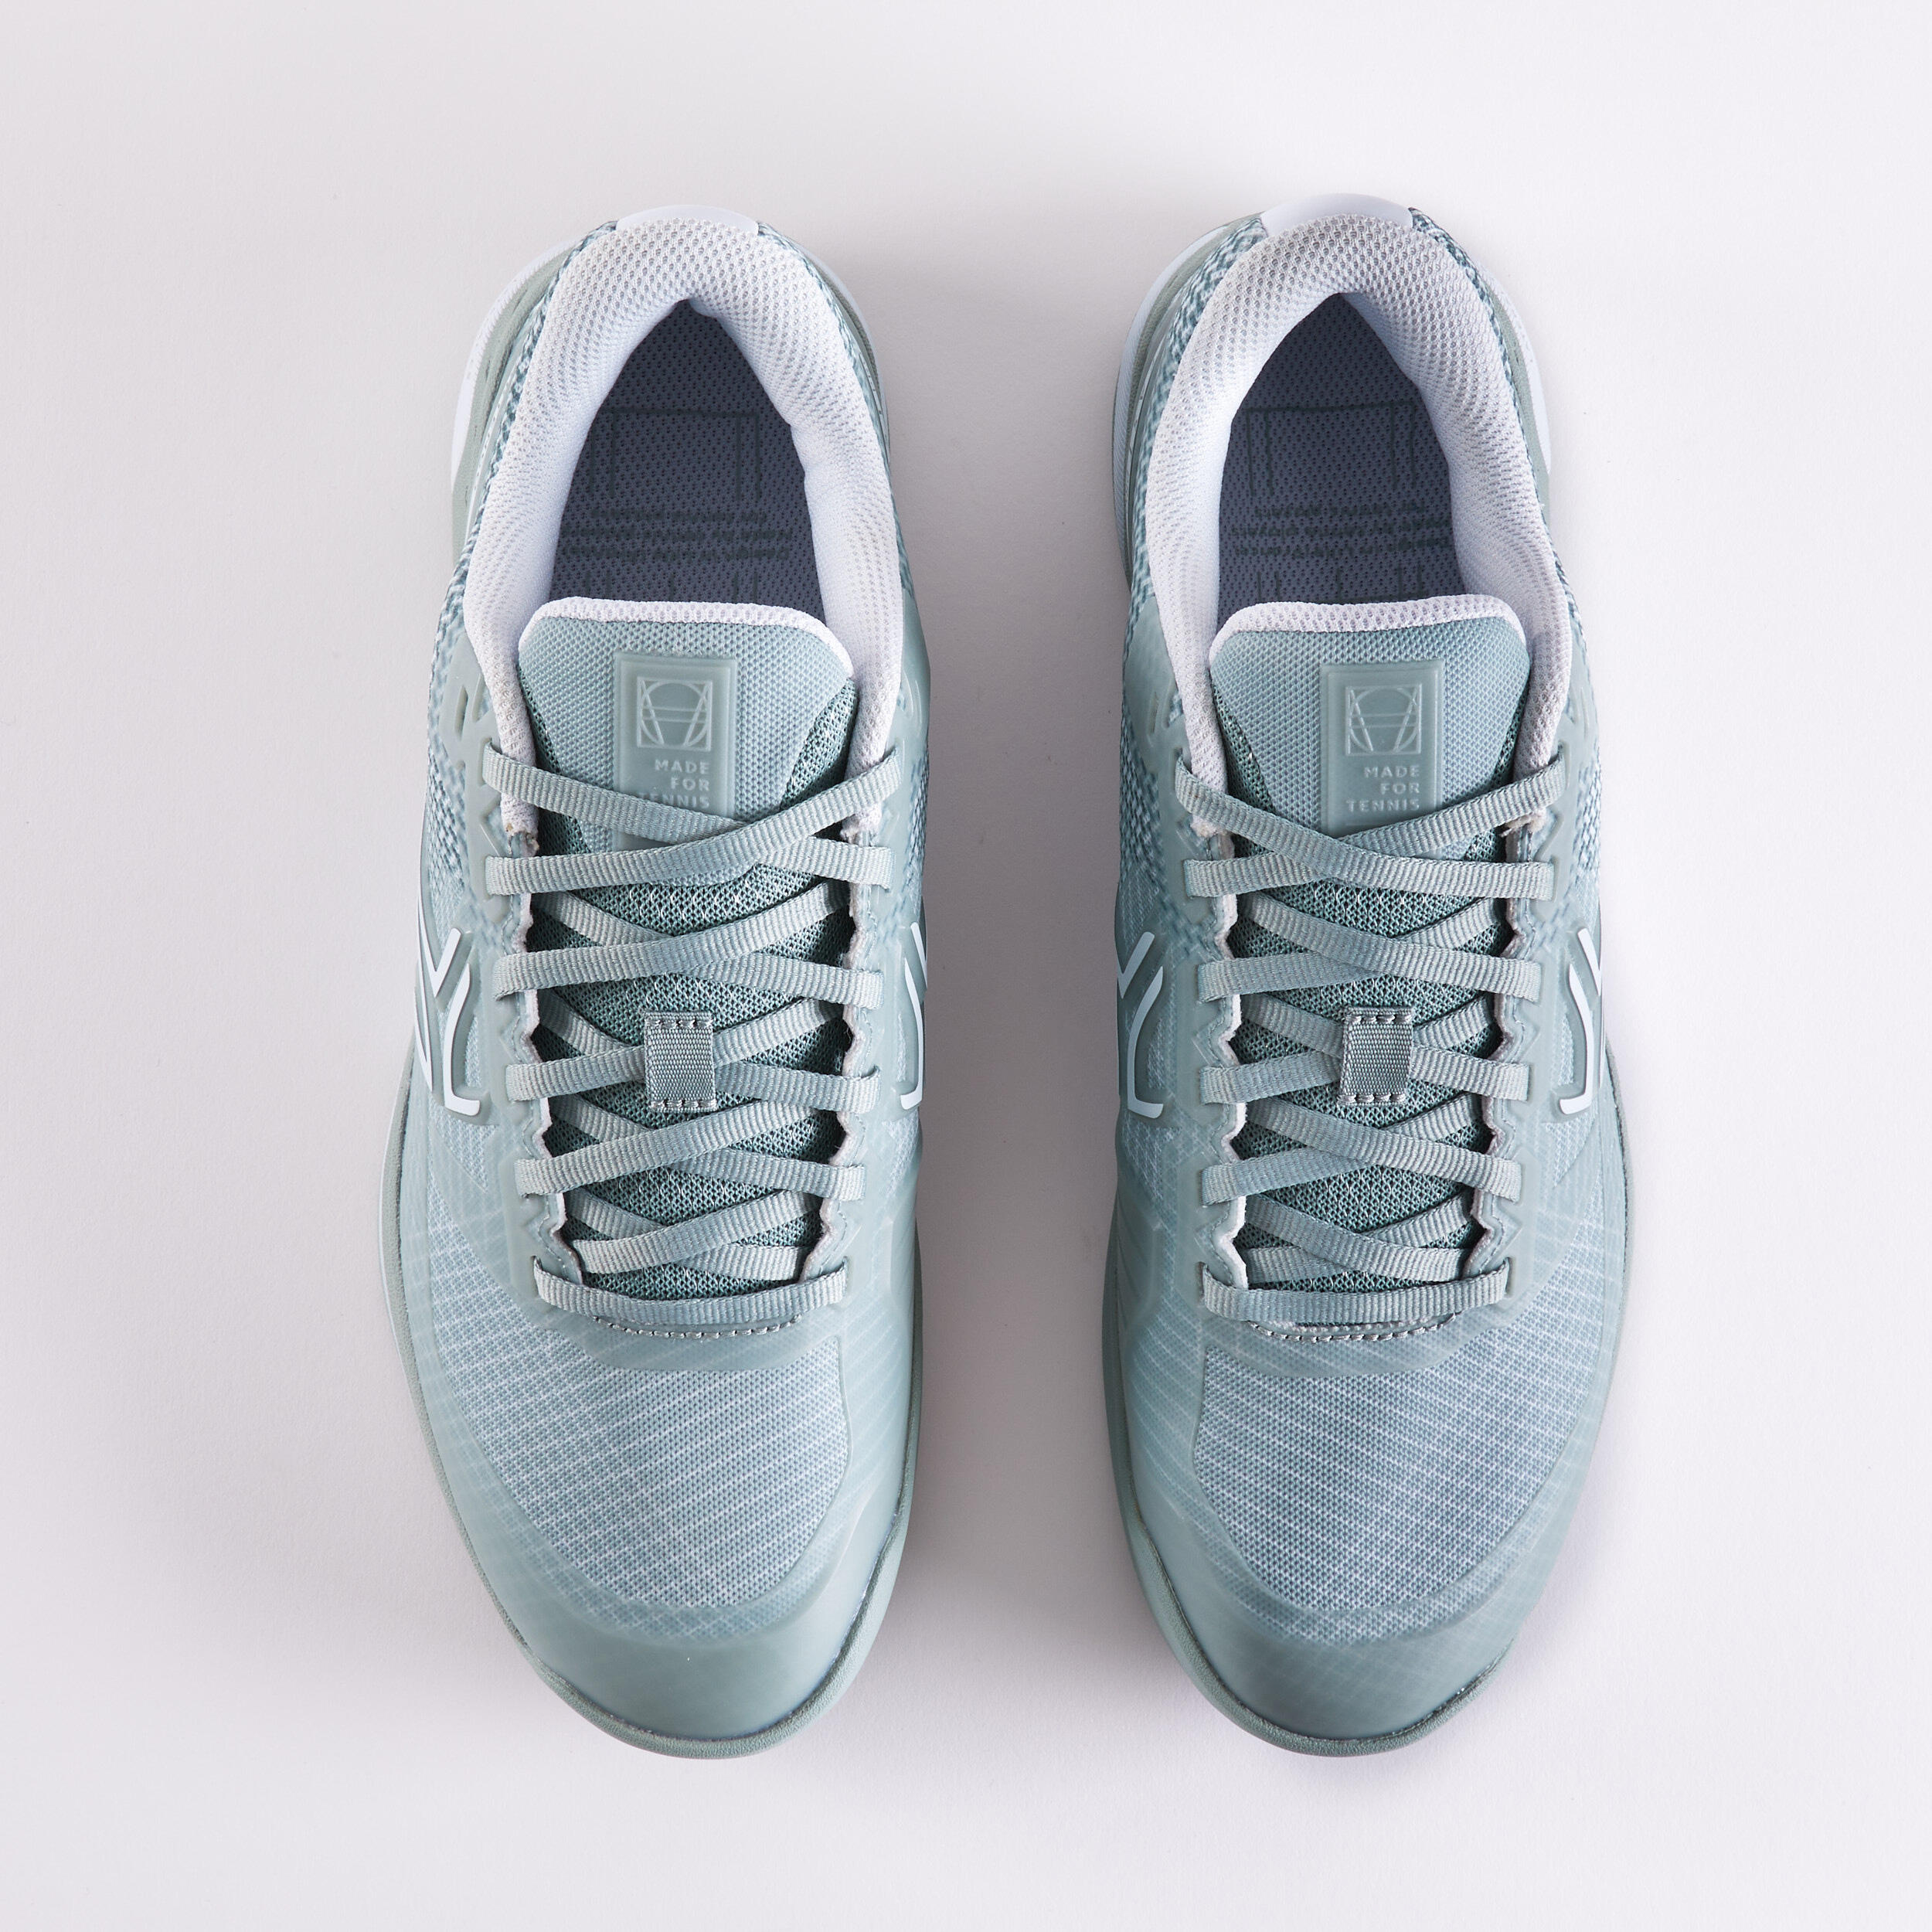 Men's Multicourt Tennis Shoes Fast Pro - Green 9/9